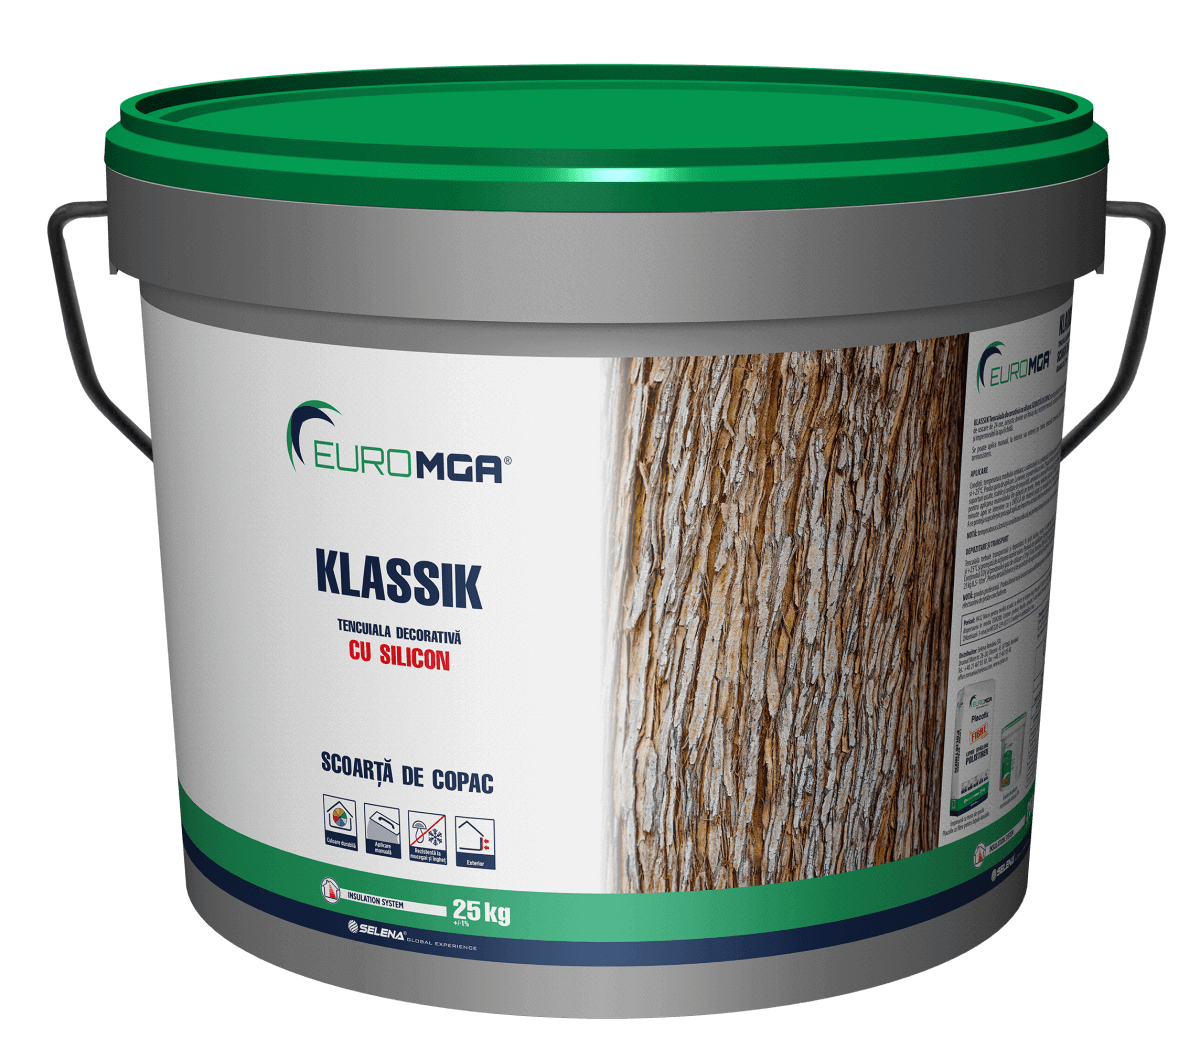 Decorative plasters - KLASSIK EuroMGA K20 Silicone Decorative Plaster (Cinnamon) 25KG, https:maxbau.ro